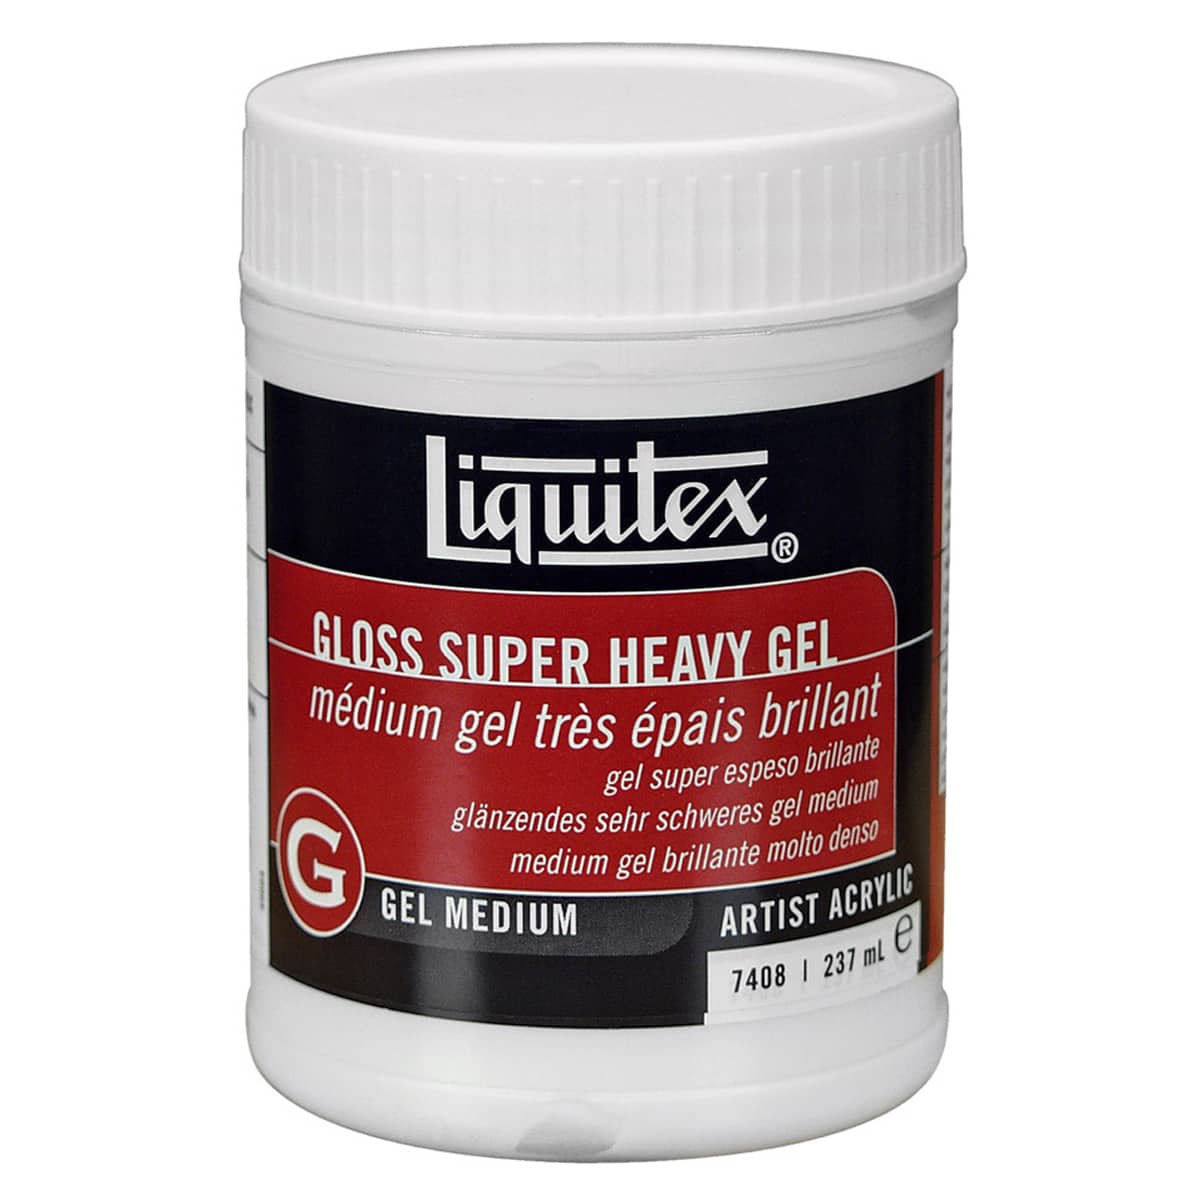 Liquitex Gloss Heavy Gel Medium 1 Gallon